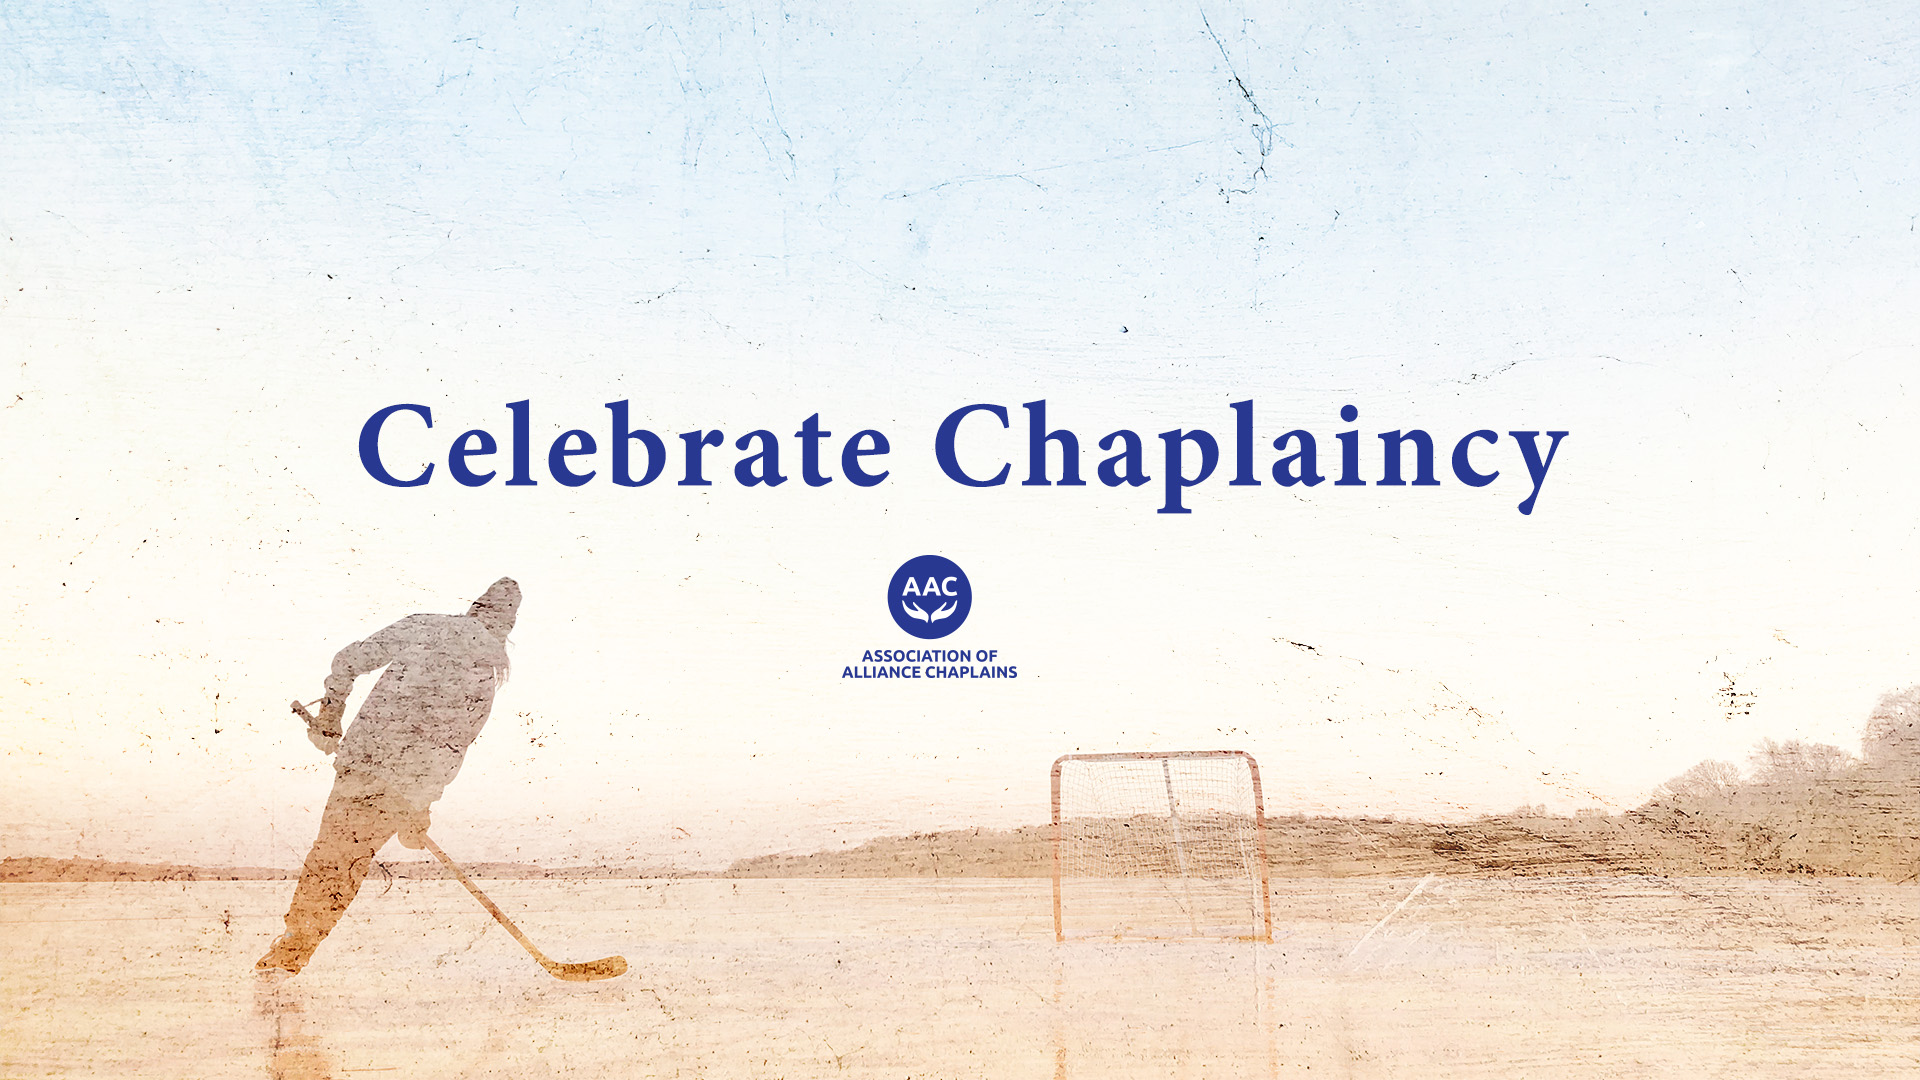 Celebrate Chaplaincy